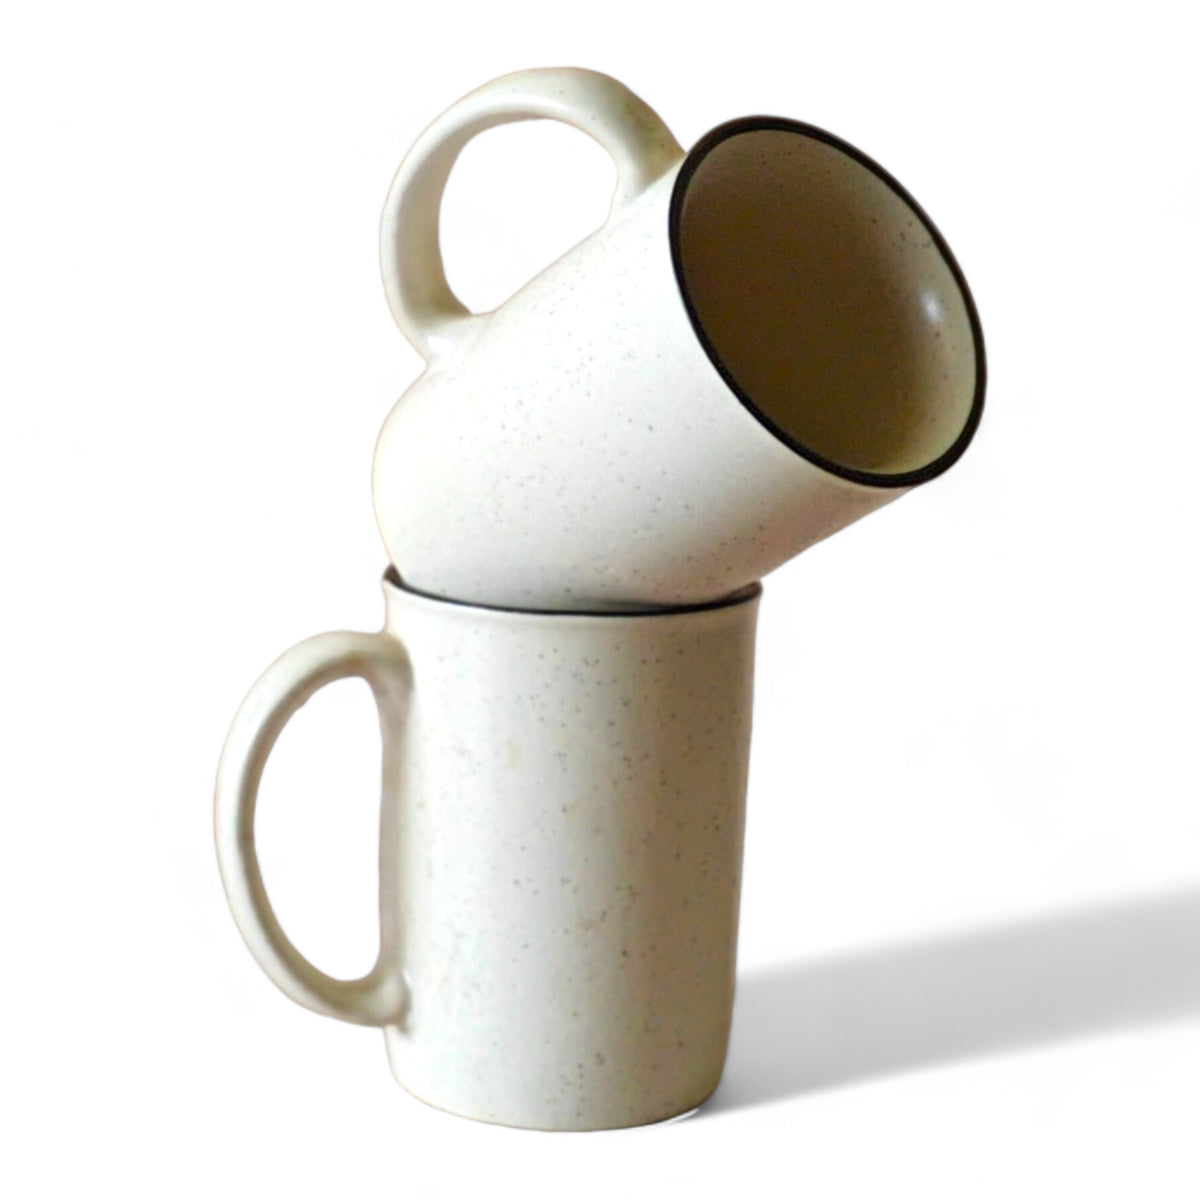 Claymistry Tall Ceramic Ivory Mug | Set of 4 | 11cm * 8cm * 11cm | Matte Finish | Dishwasher, Oven & Microwave Safe | Coffee, Tea, Lemonade, Green Tea & Milk Mug | Premium Kitchen Crockery